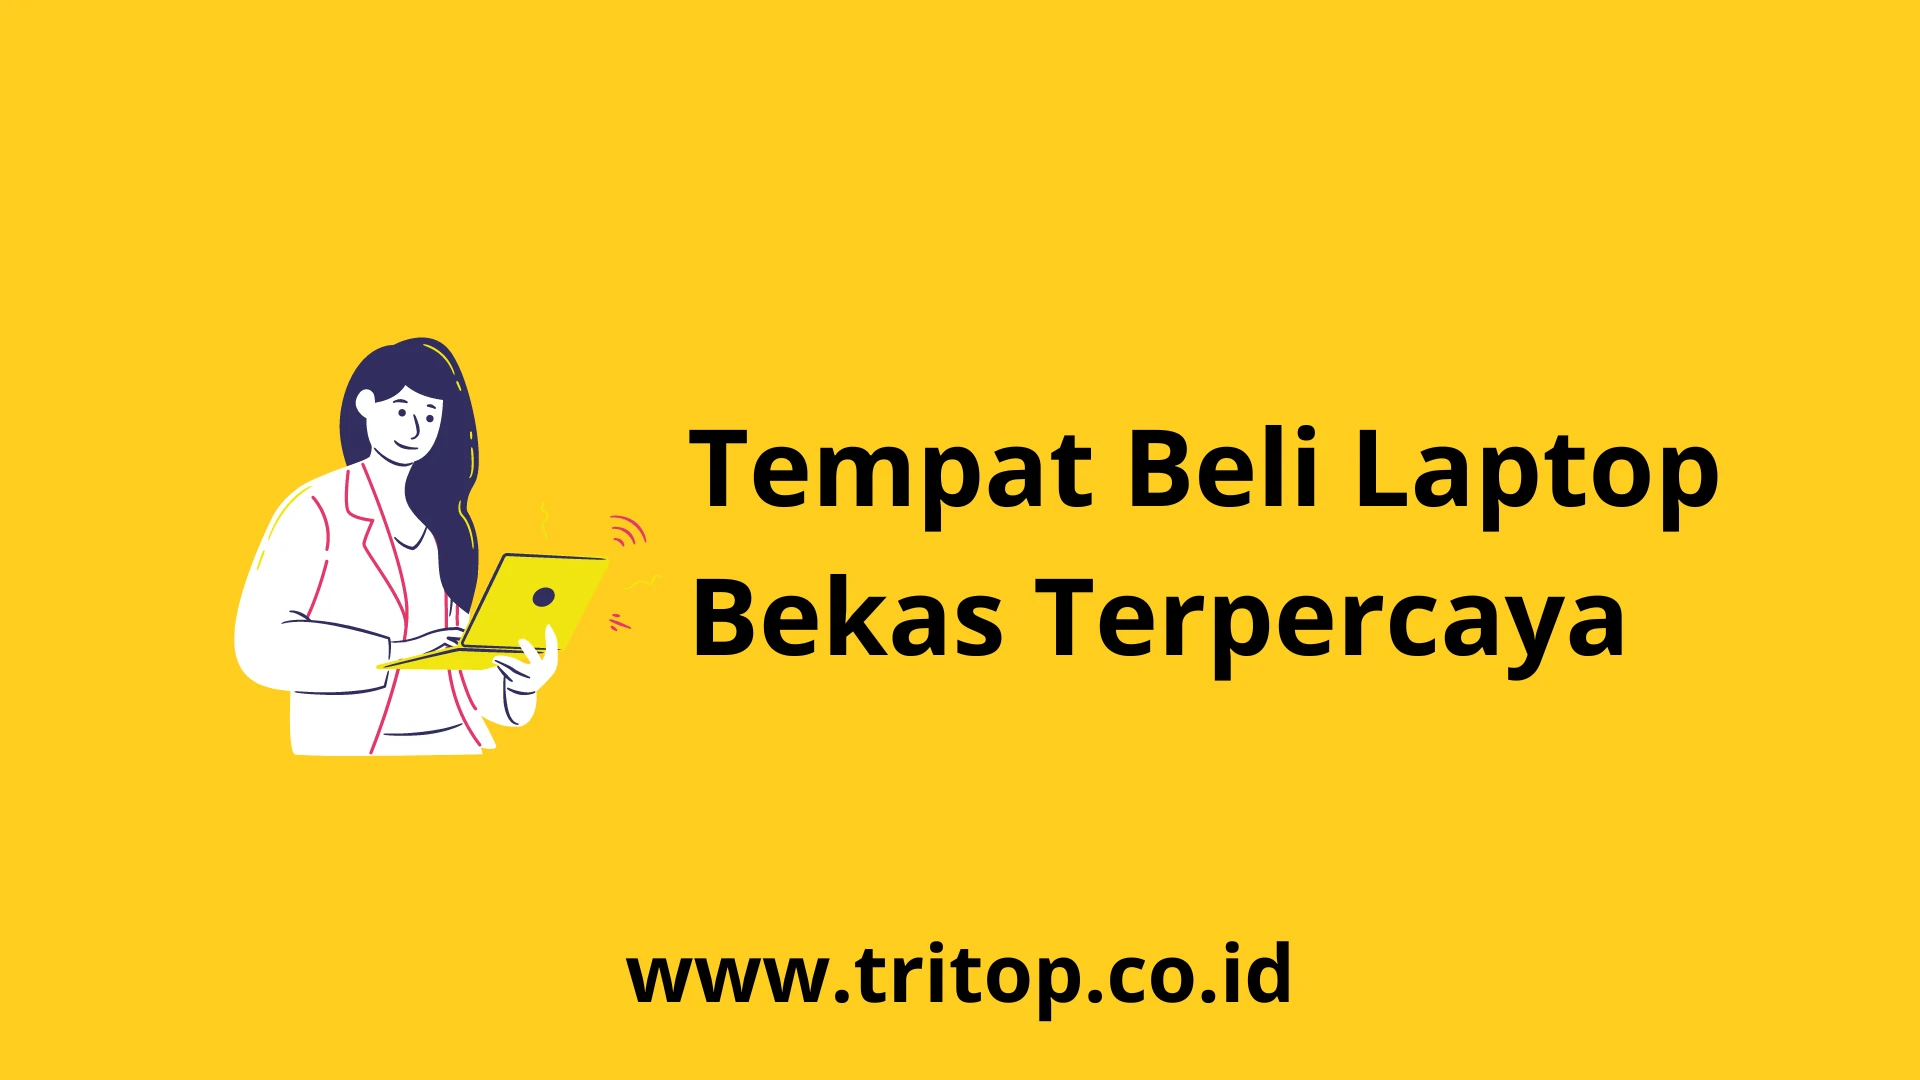 Tempat Beli Laptop Bekas Terpercaya Tritop.co.id